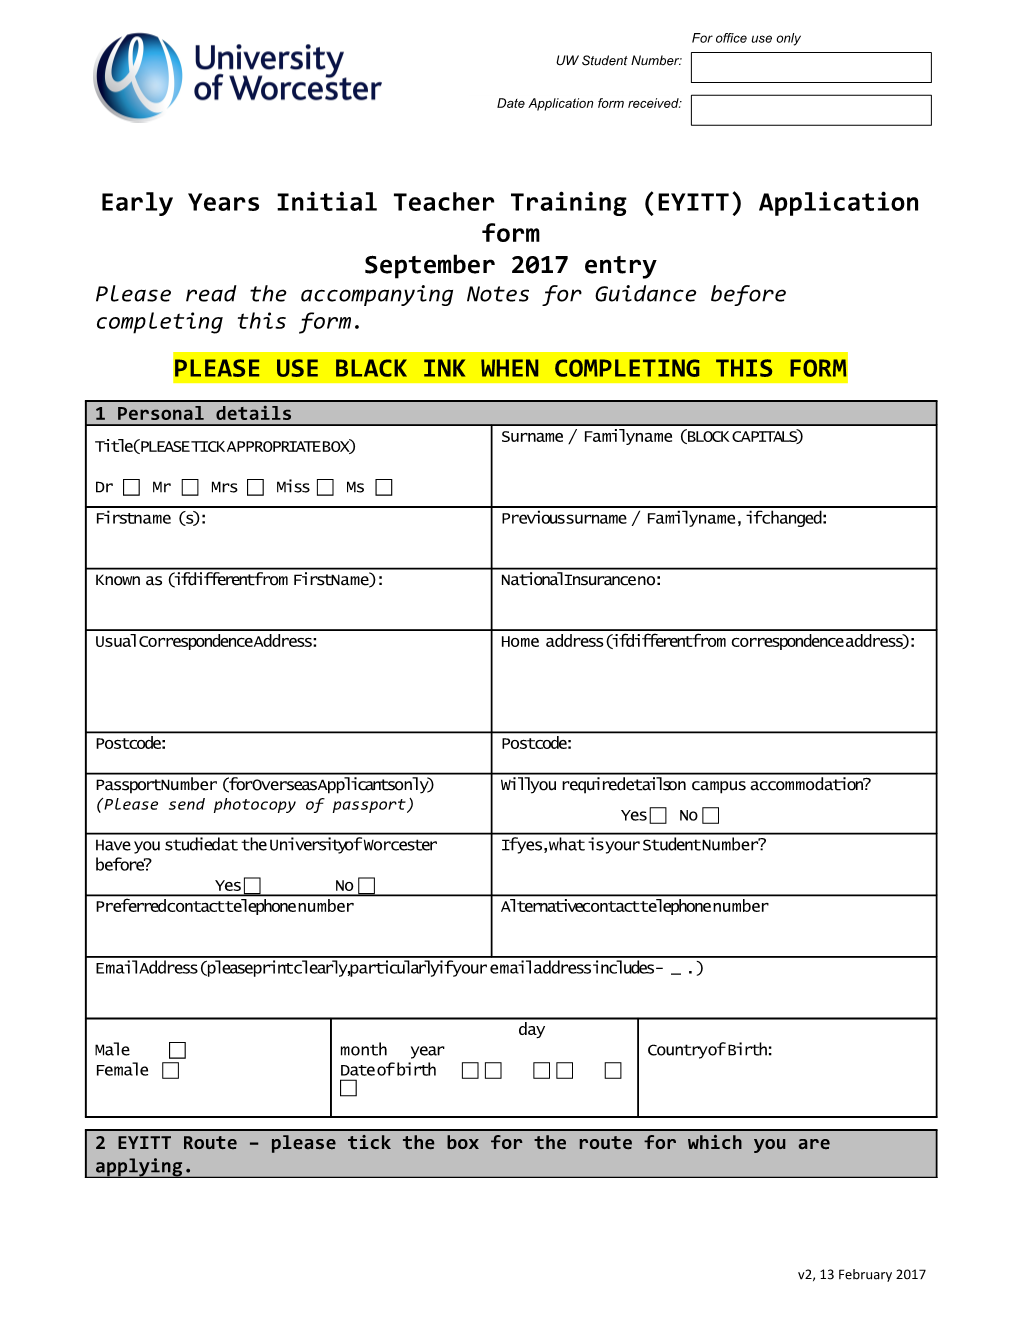 Early Years Initial Teacher Training(EYITT) Application Form